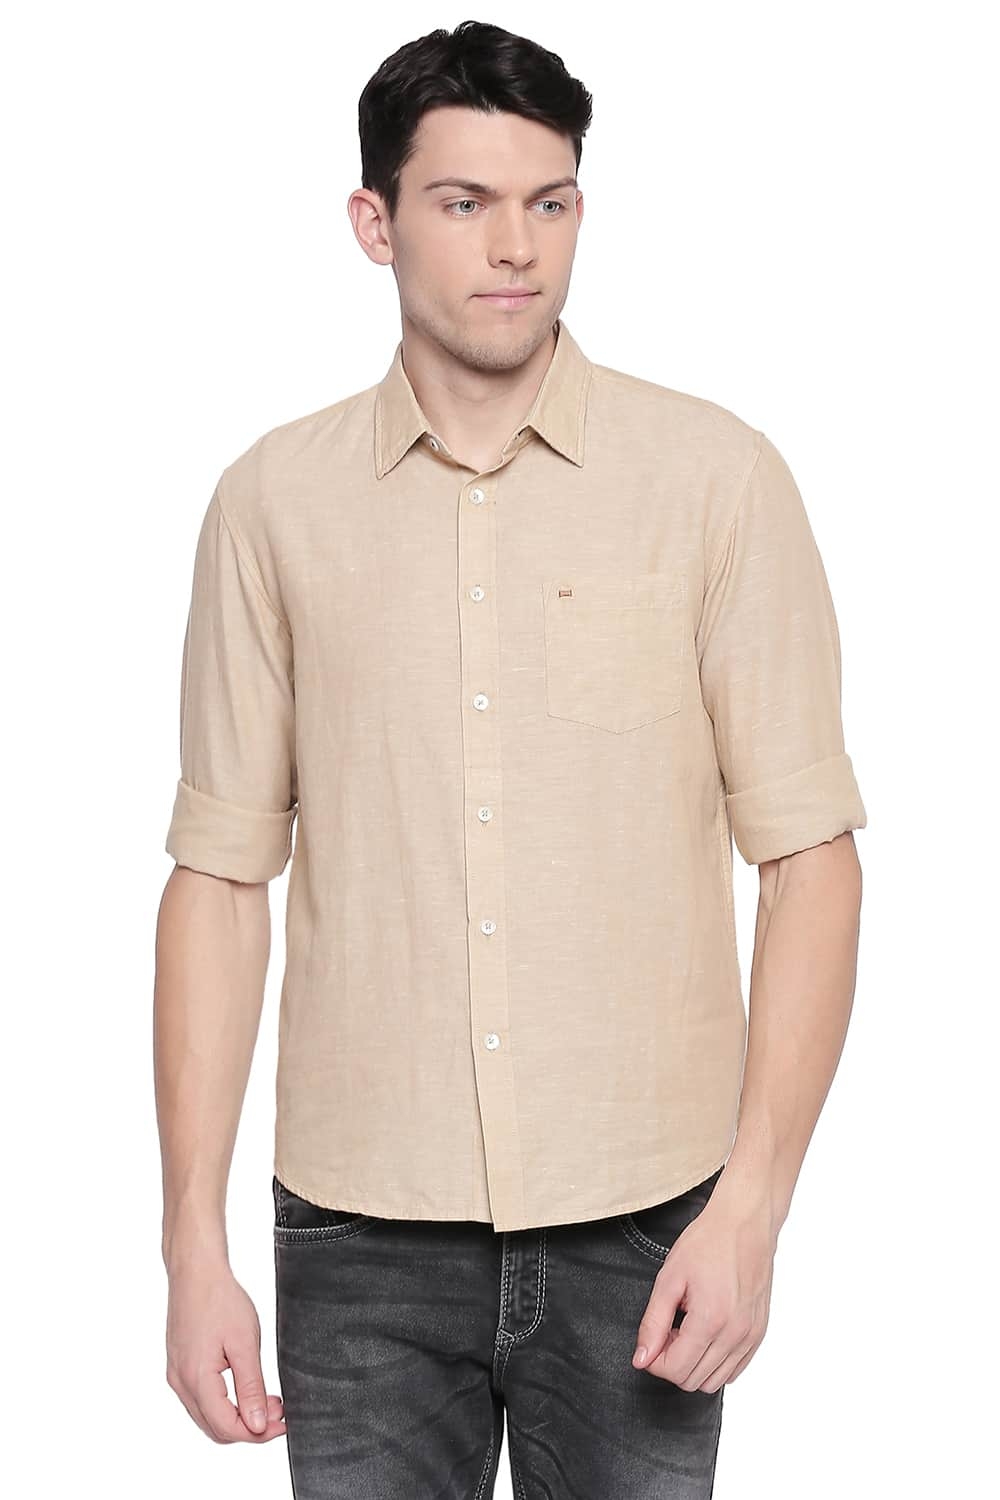 Basics | Basics Slim Fit Warm Khaki Cotton Linen Shirt